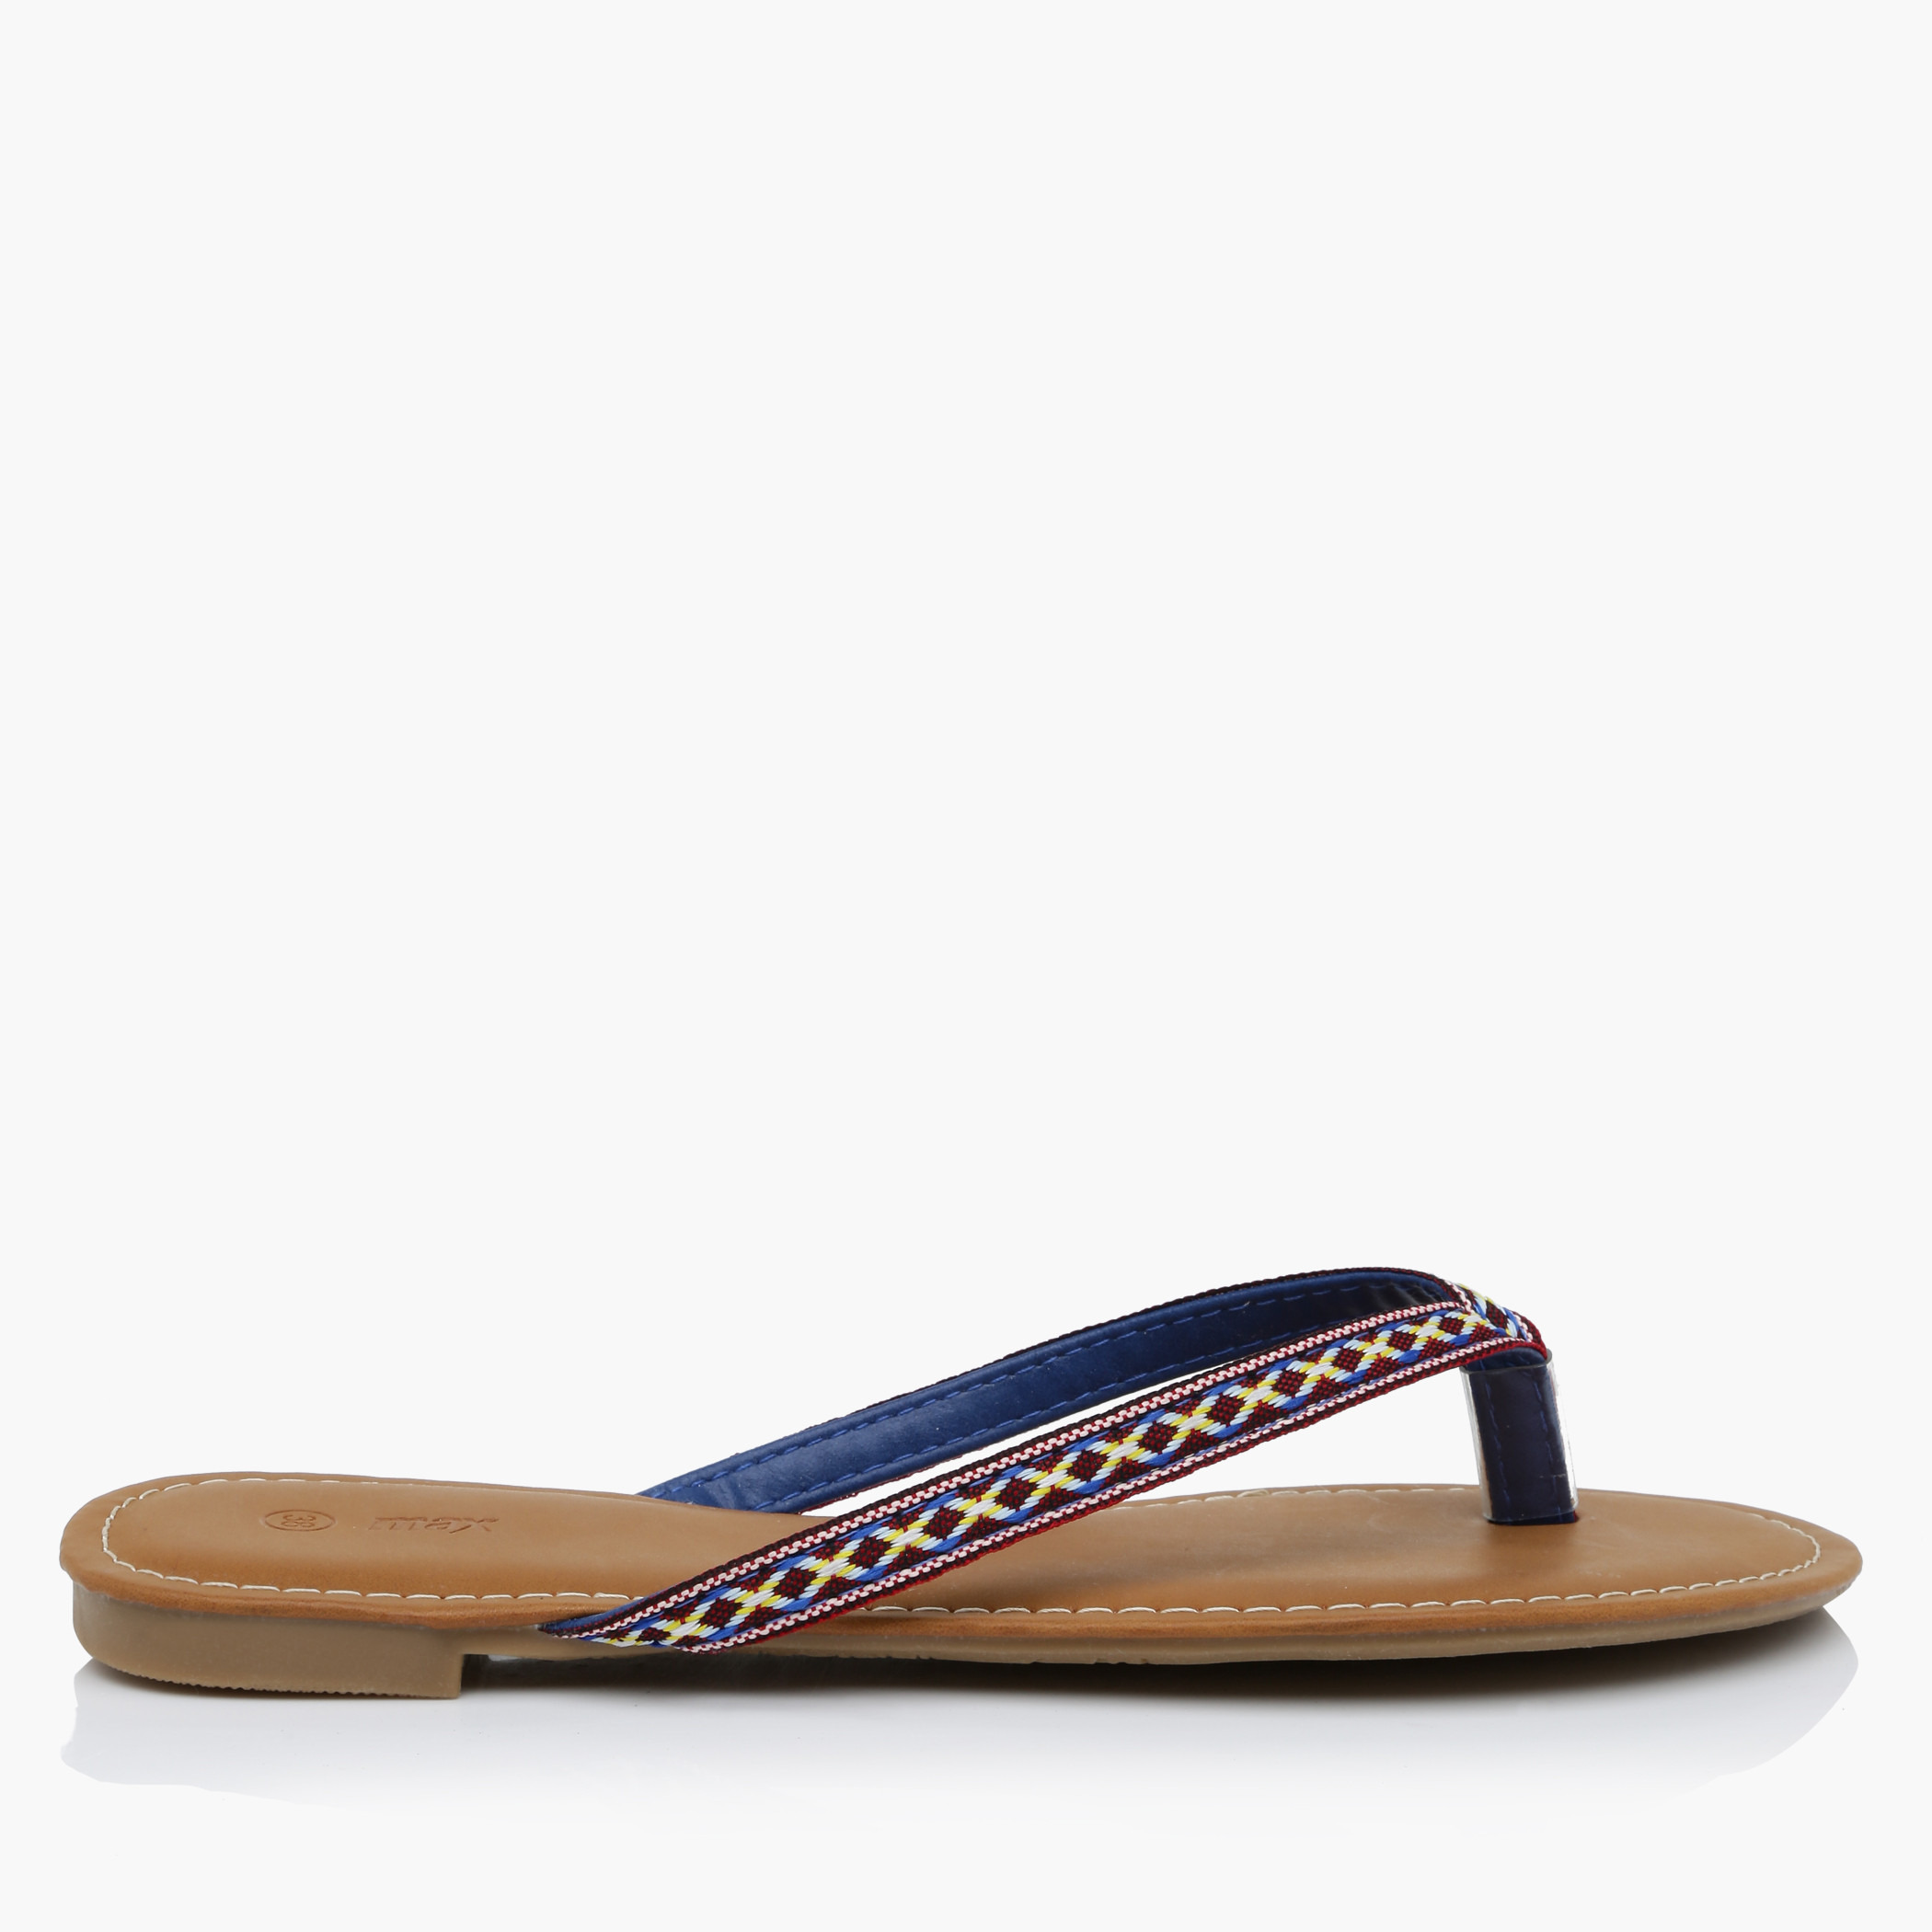 Shop Cross Strap Flat Sandals Online | R&B UAE